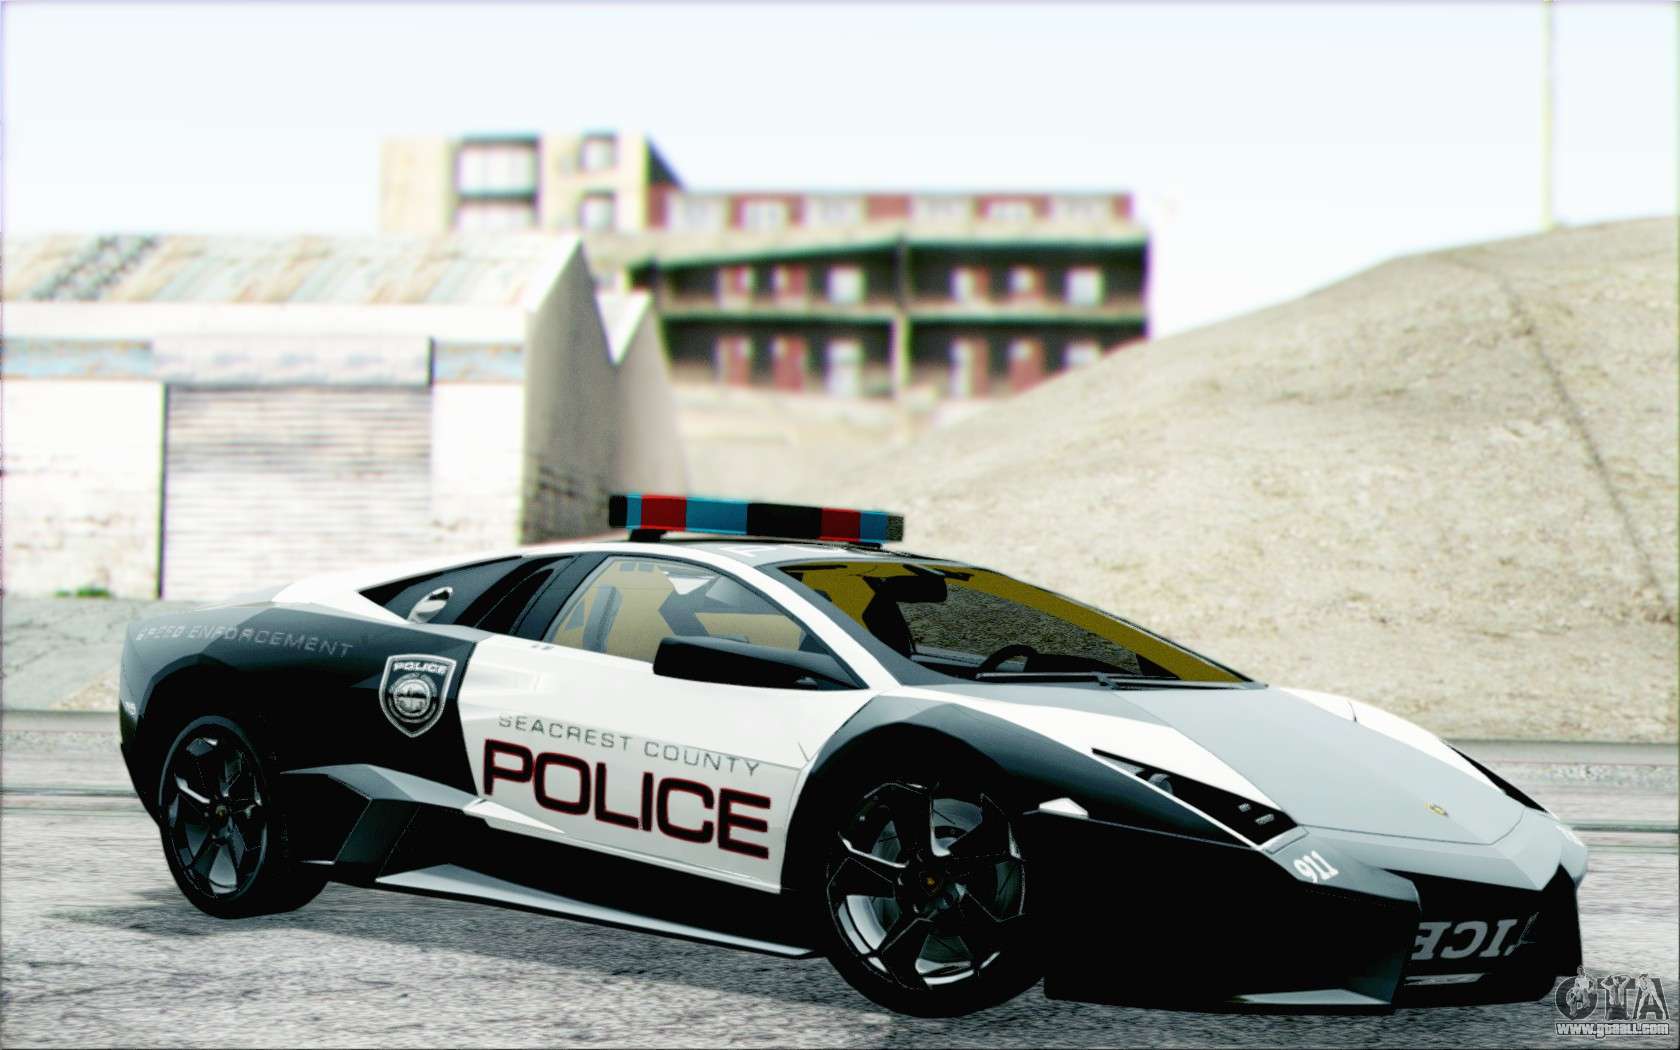 Lamborghini Reventon Police Car for GTA San Andreas